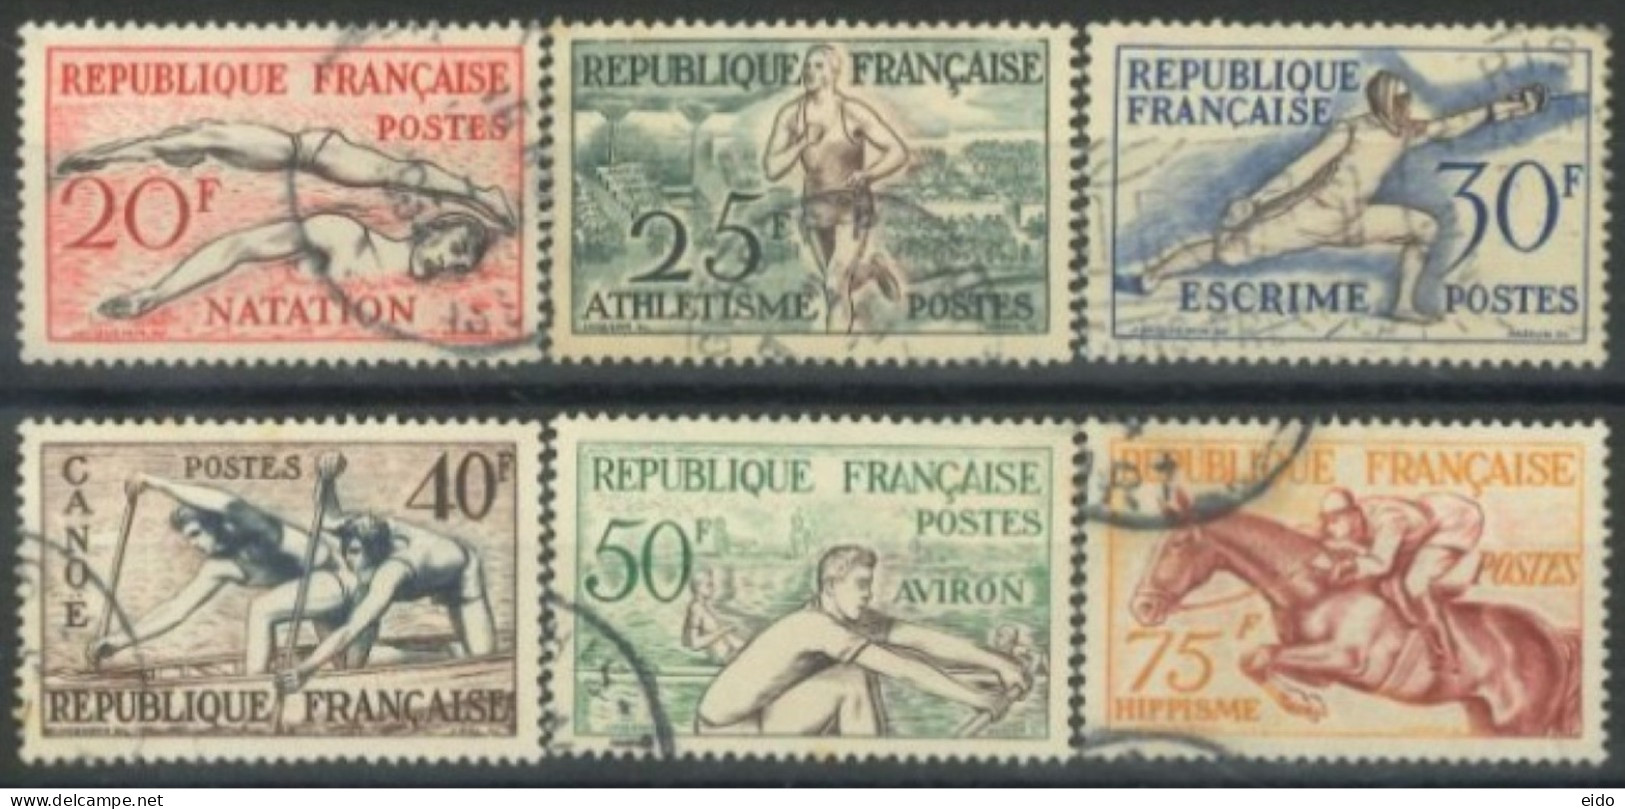 FRANCE - 1953, OLYMPIC GAMES, HELSINKI 1952 STAMPS COMPLETE SET OF 6, USED. - Oblitérés